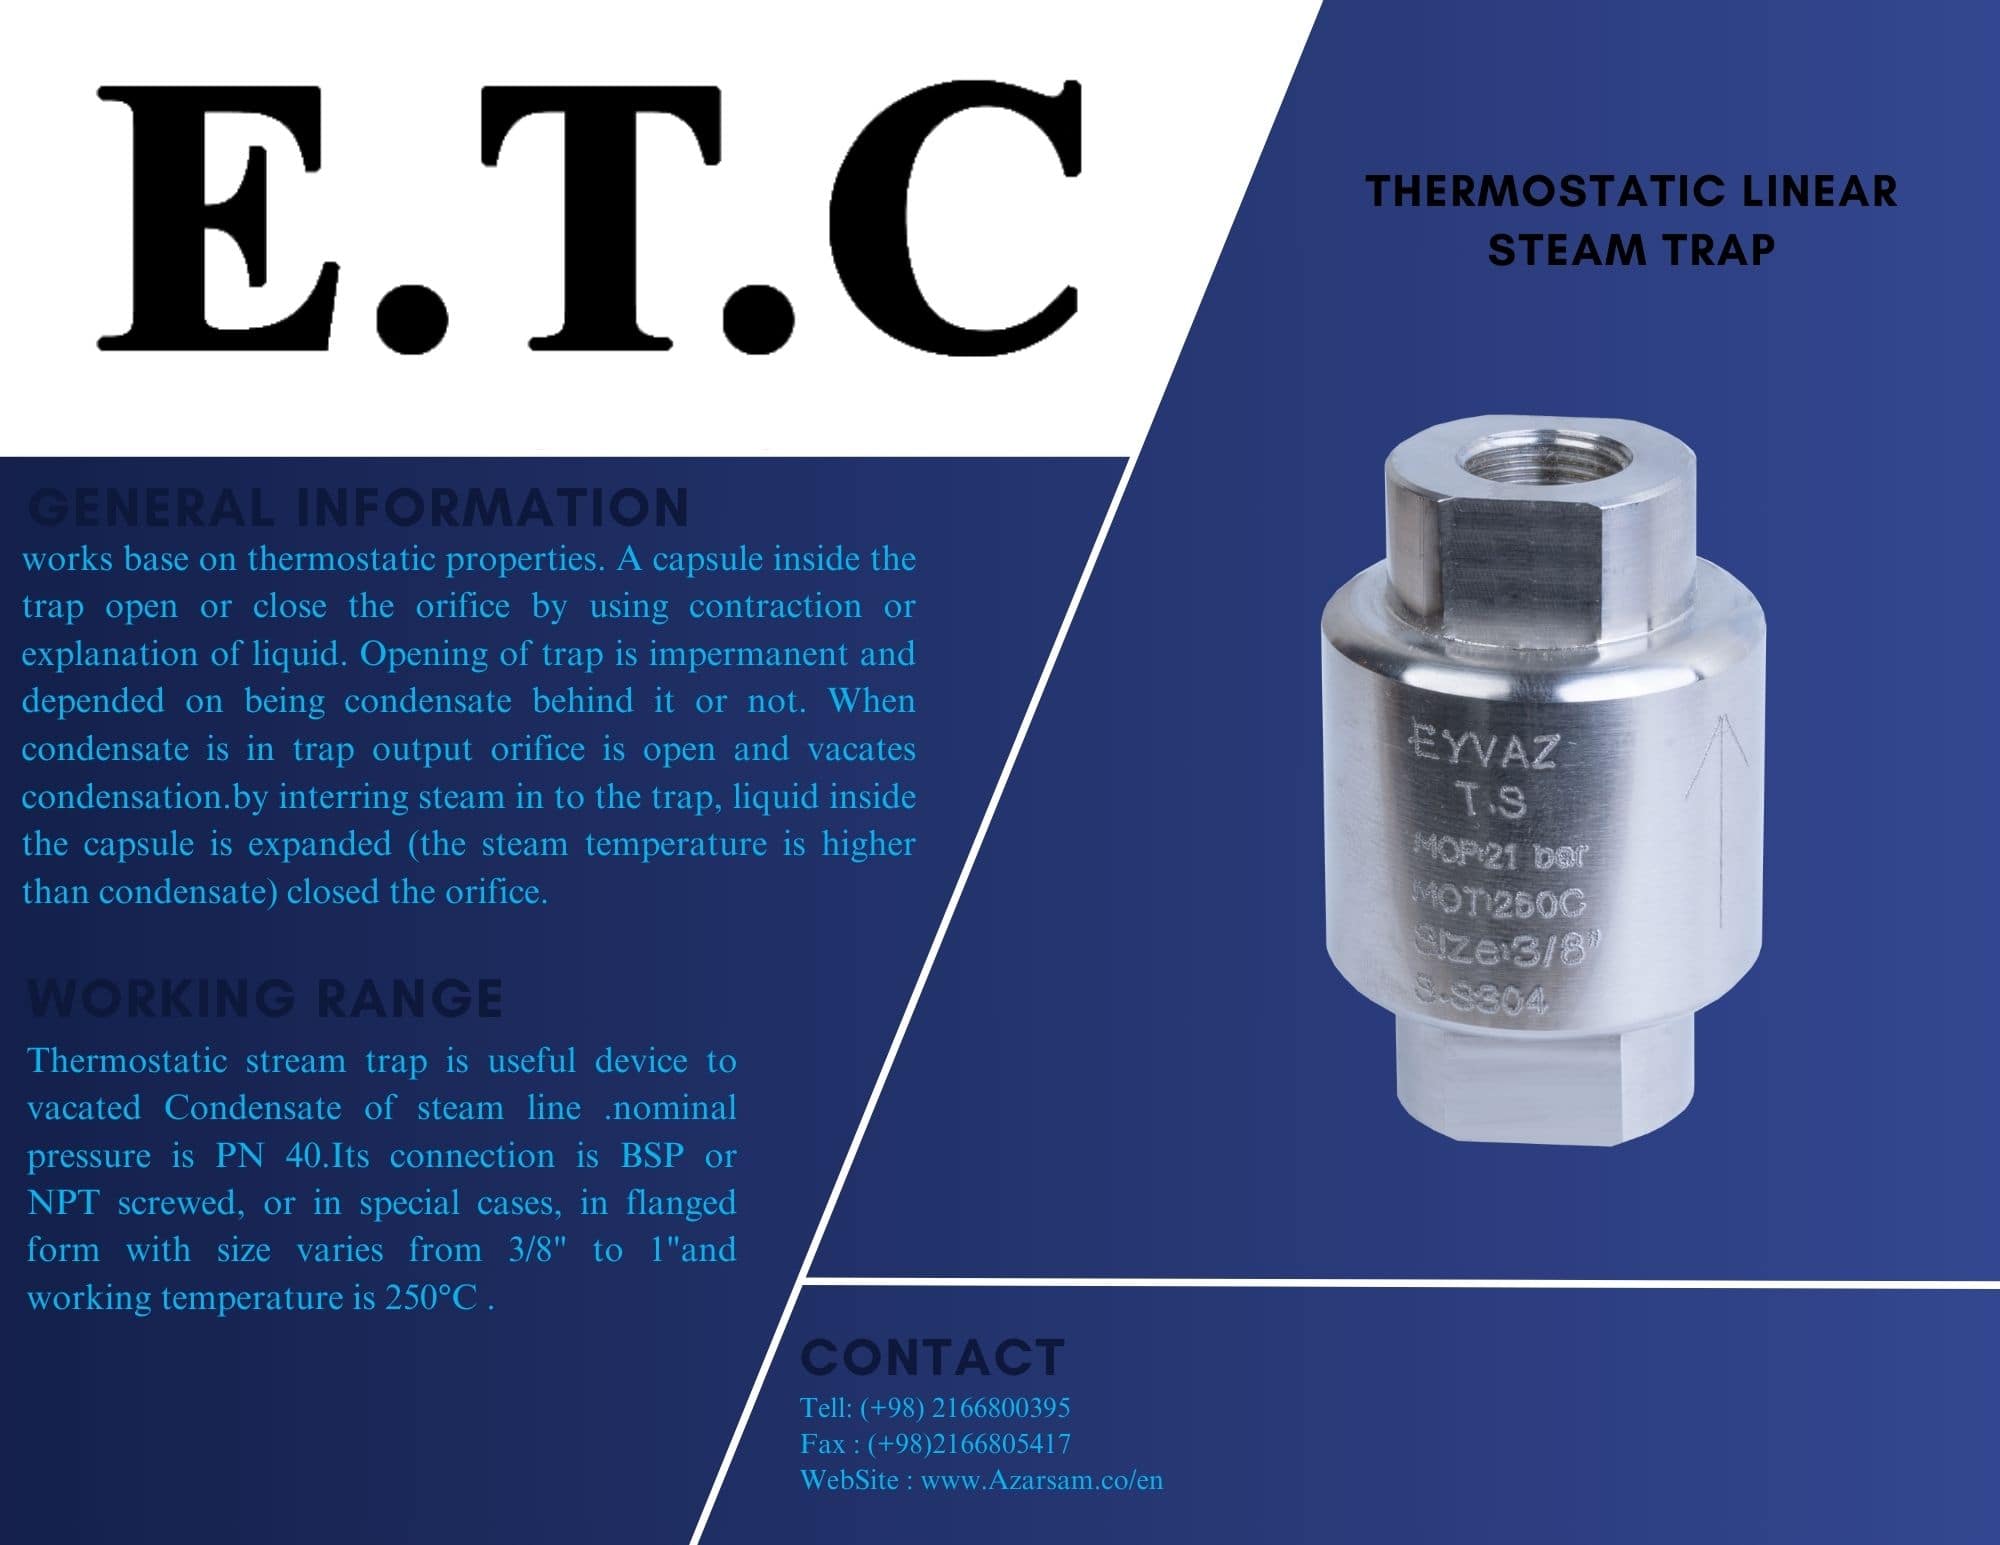 Thermostatic linear steam trap